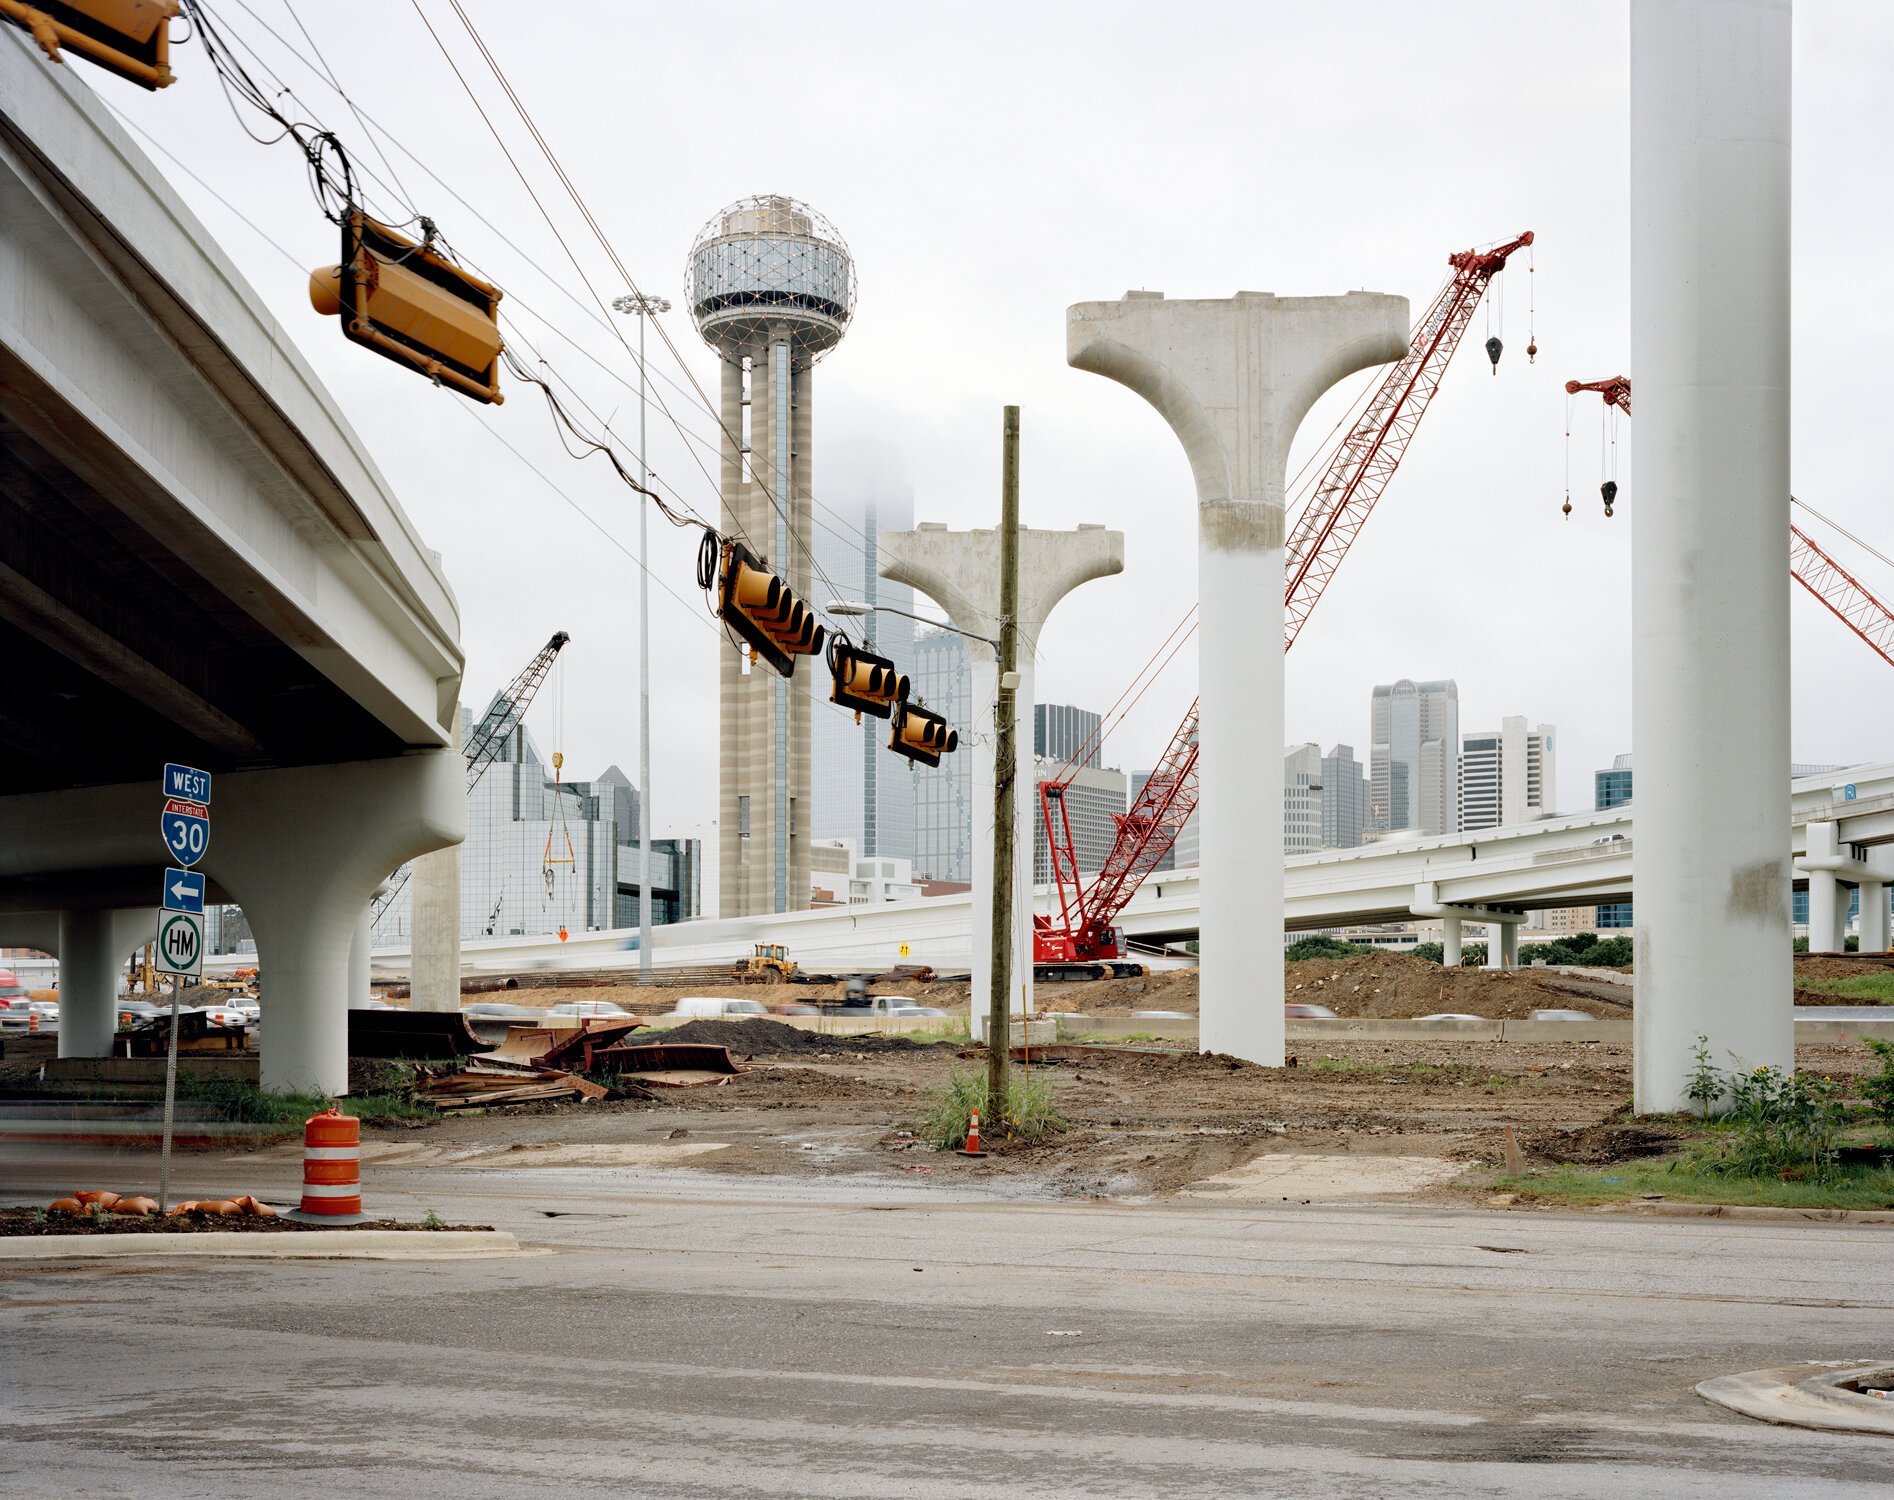 "Interstates 30 and 35, Dallas, Texas, 2016” by Joshua Dudley Greer | Toyo 4x5 Field Camera, Kodak Portra 400 Film